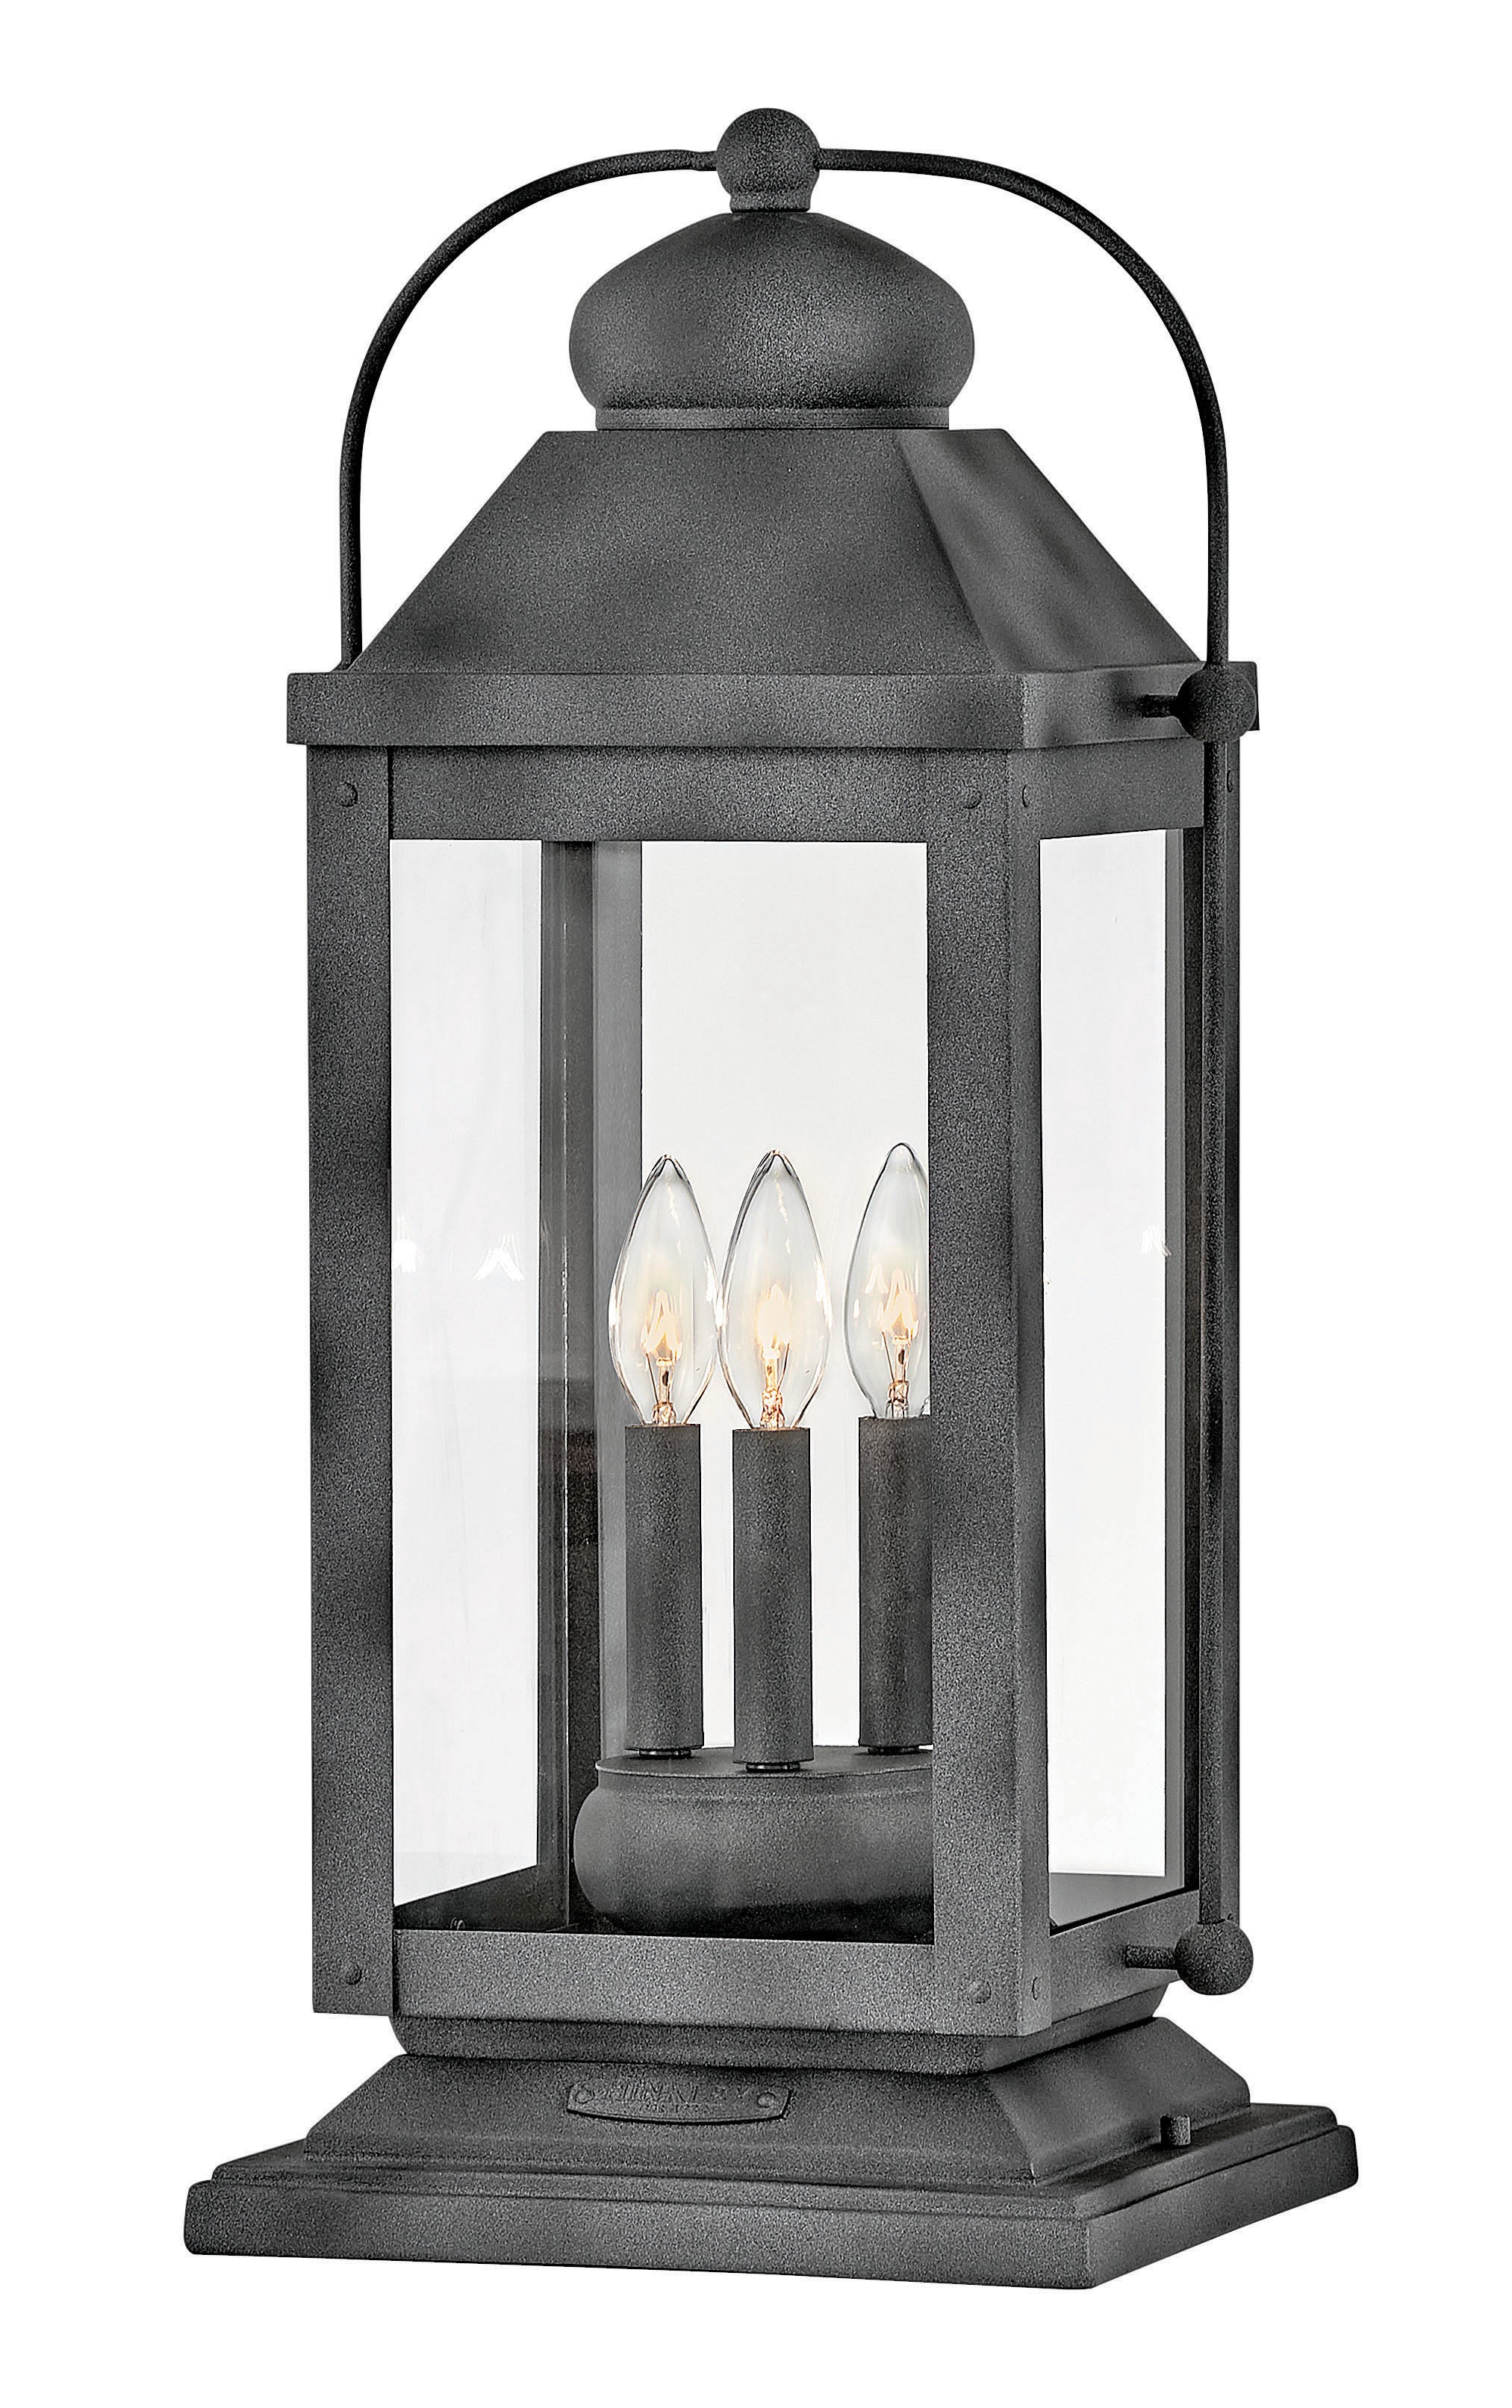 ANCHORAGE Lampe de jardin portative Noir - 1857DZ | HINKLEY